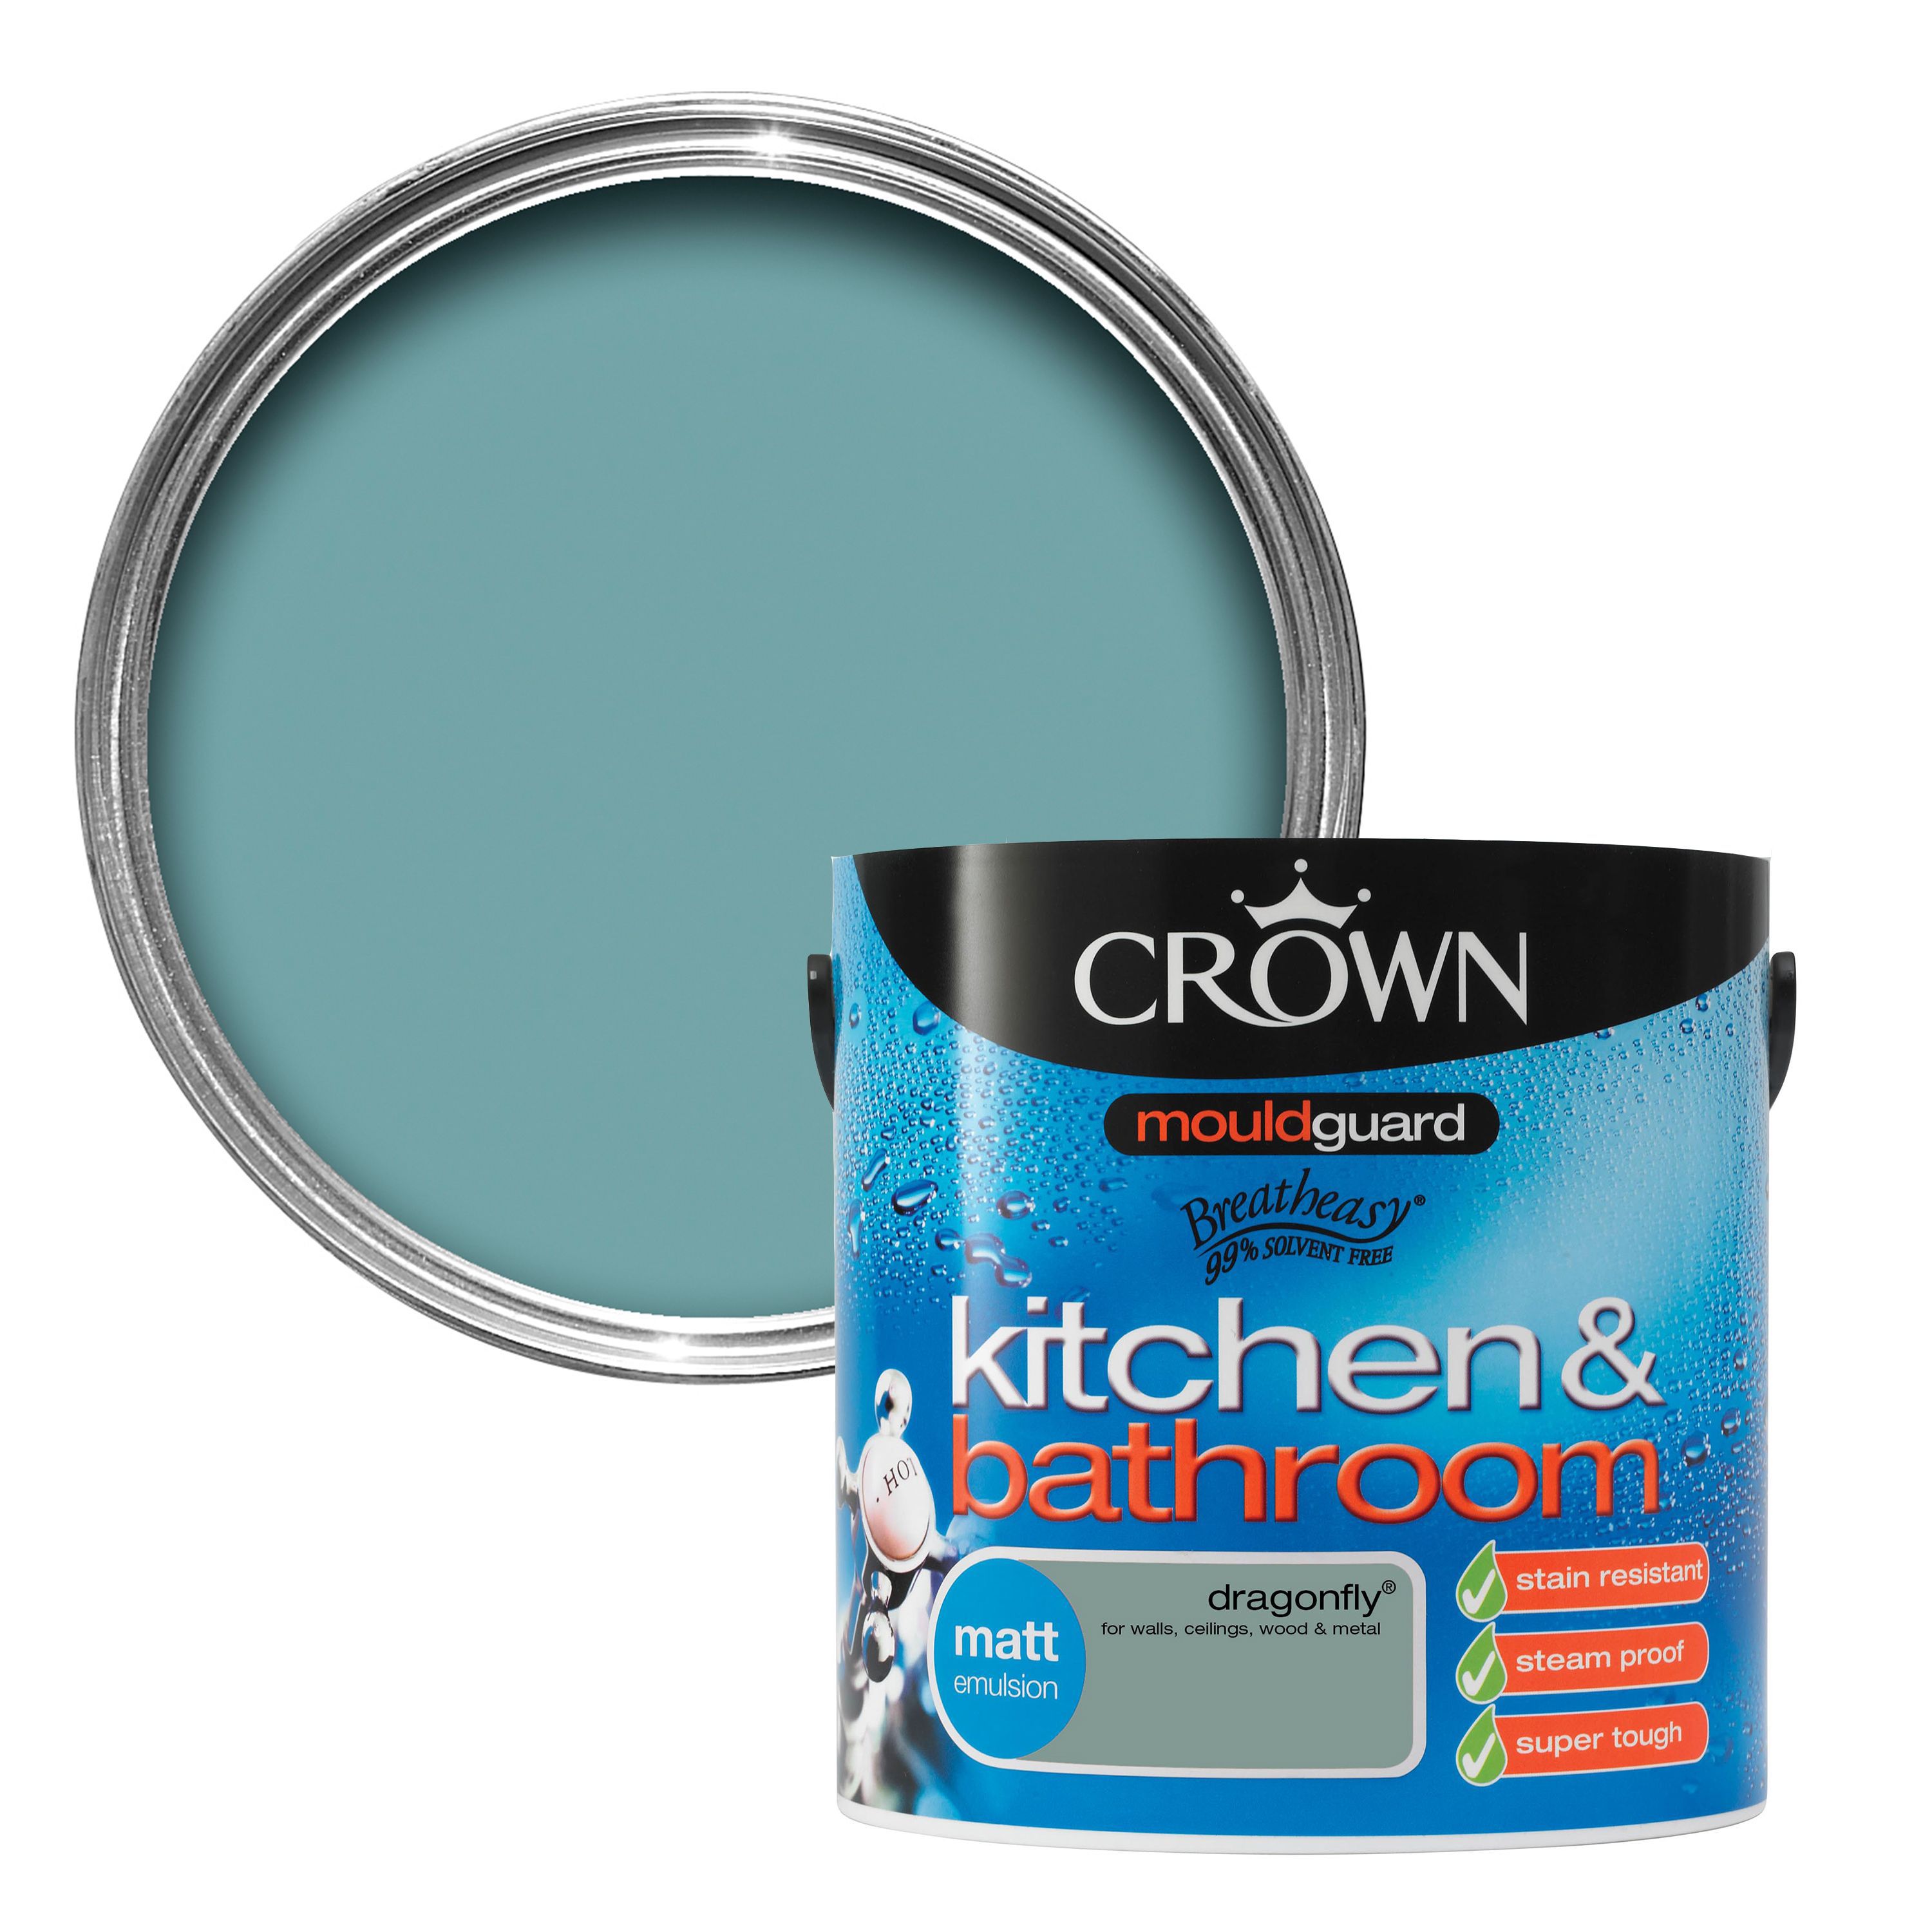 Crown Kitchen & bathroom Dragonfly Matt Emulsion paint, 2.5L